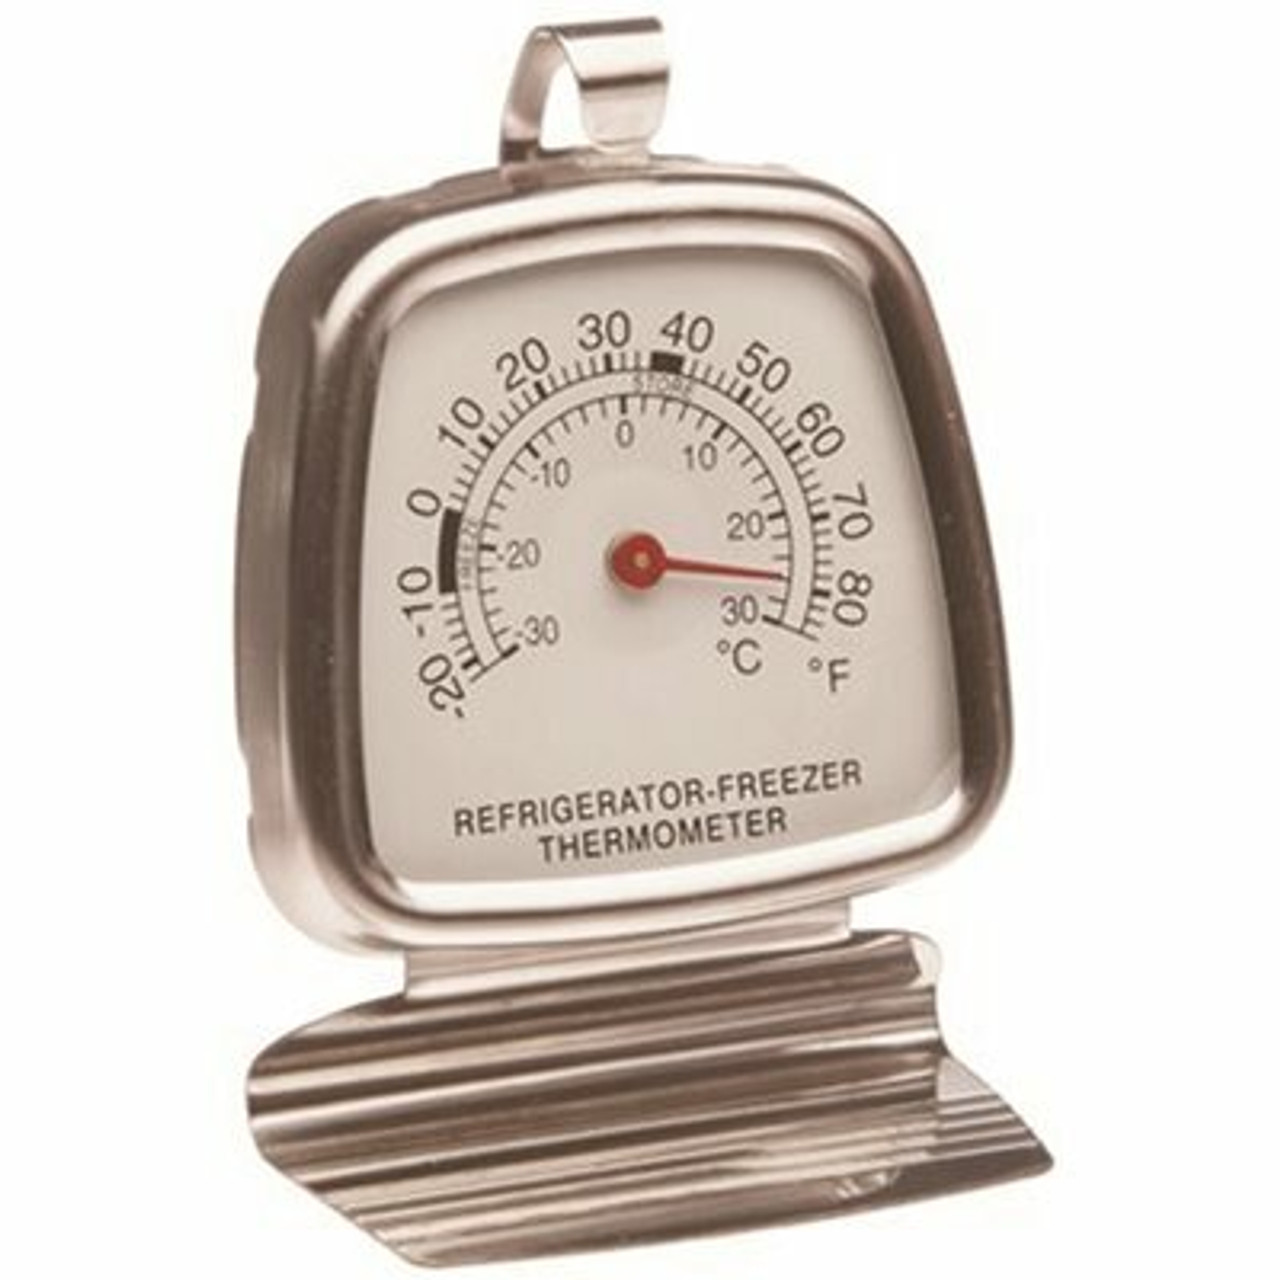 Supco Refrigeration-Freezer Thermometer